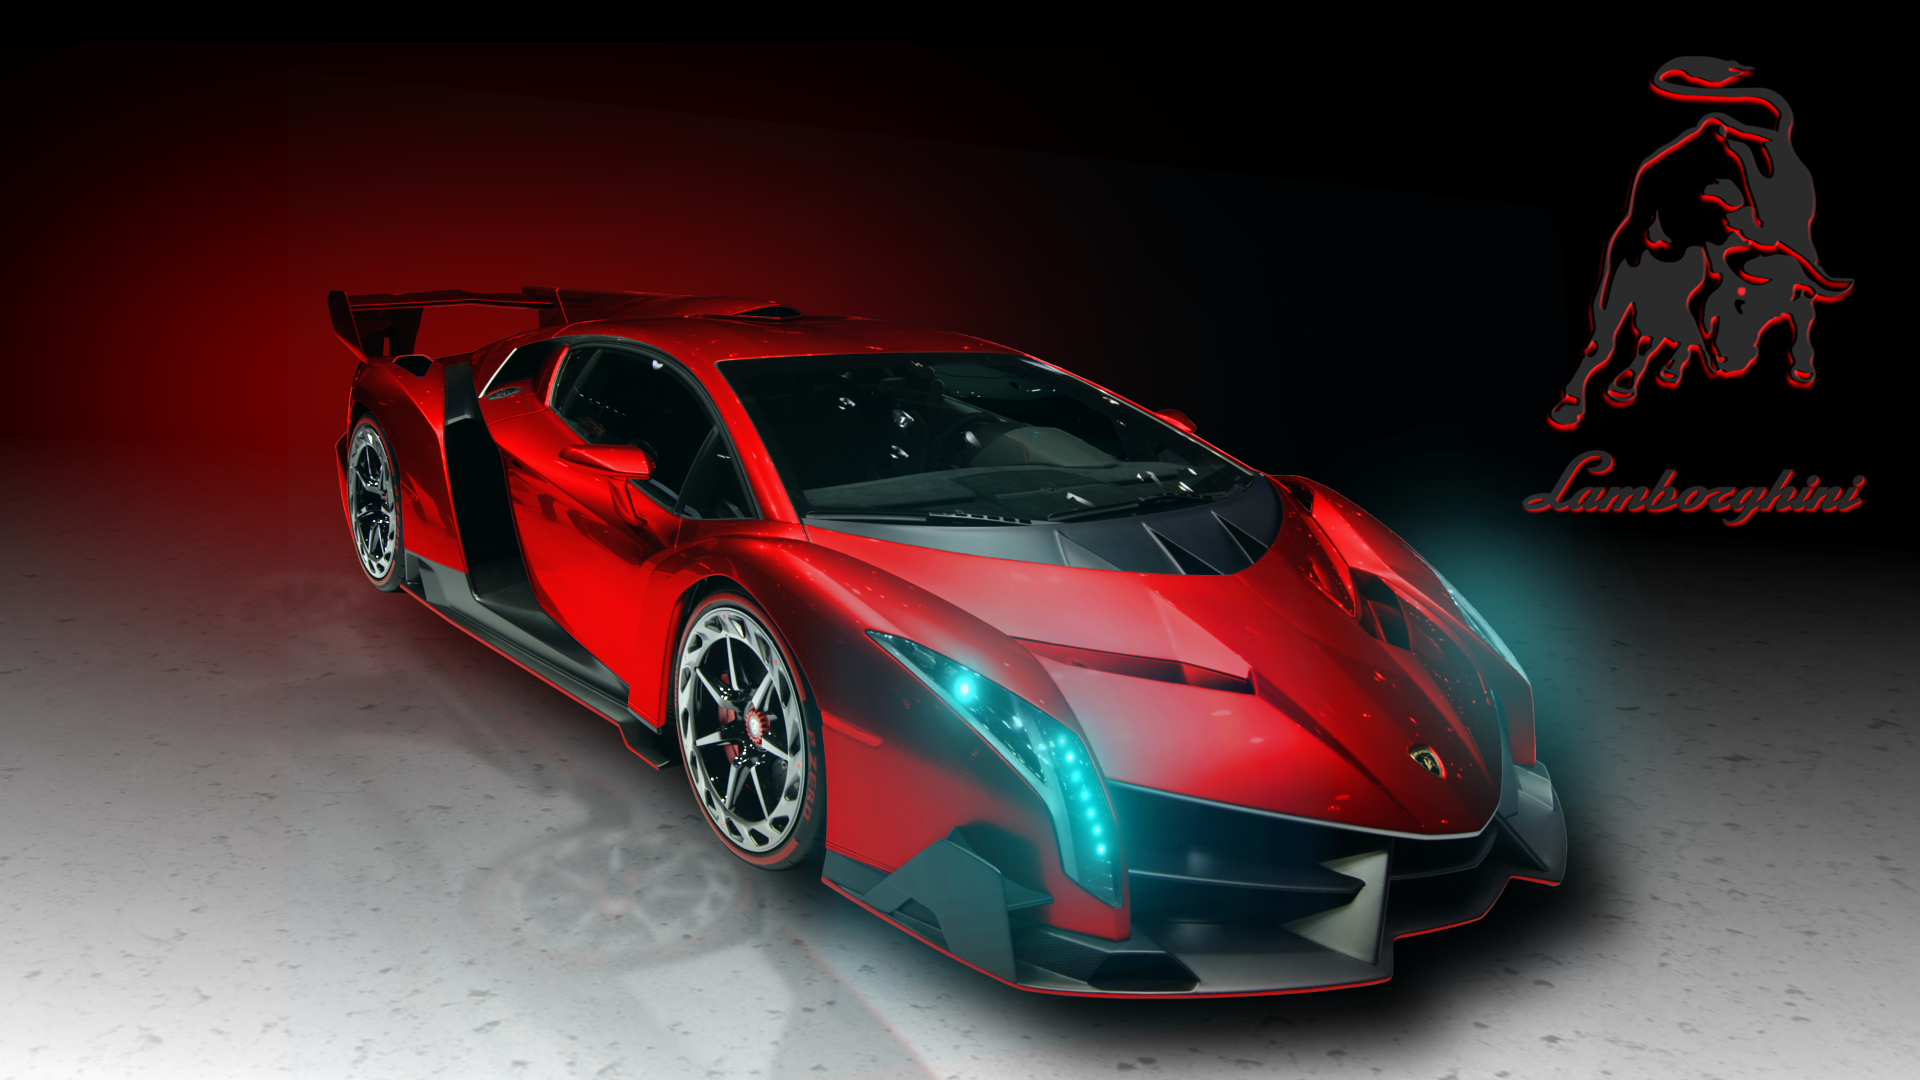 Lamborghini Veneno Red Art HD Wallpaper Full Size